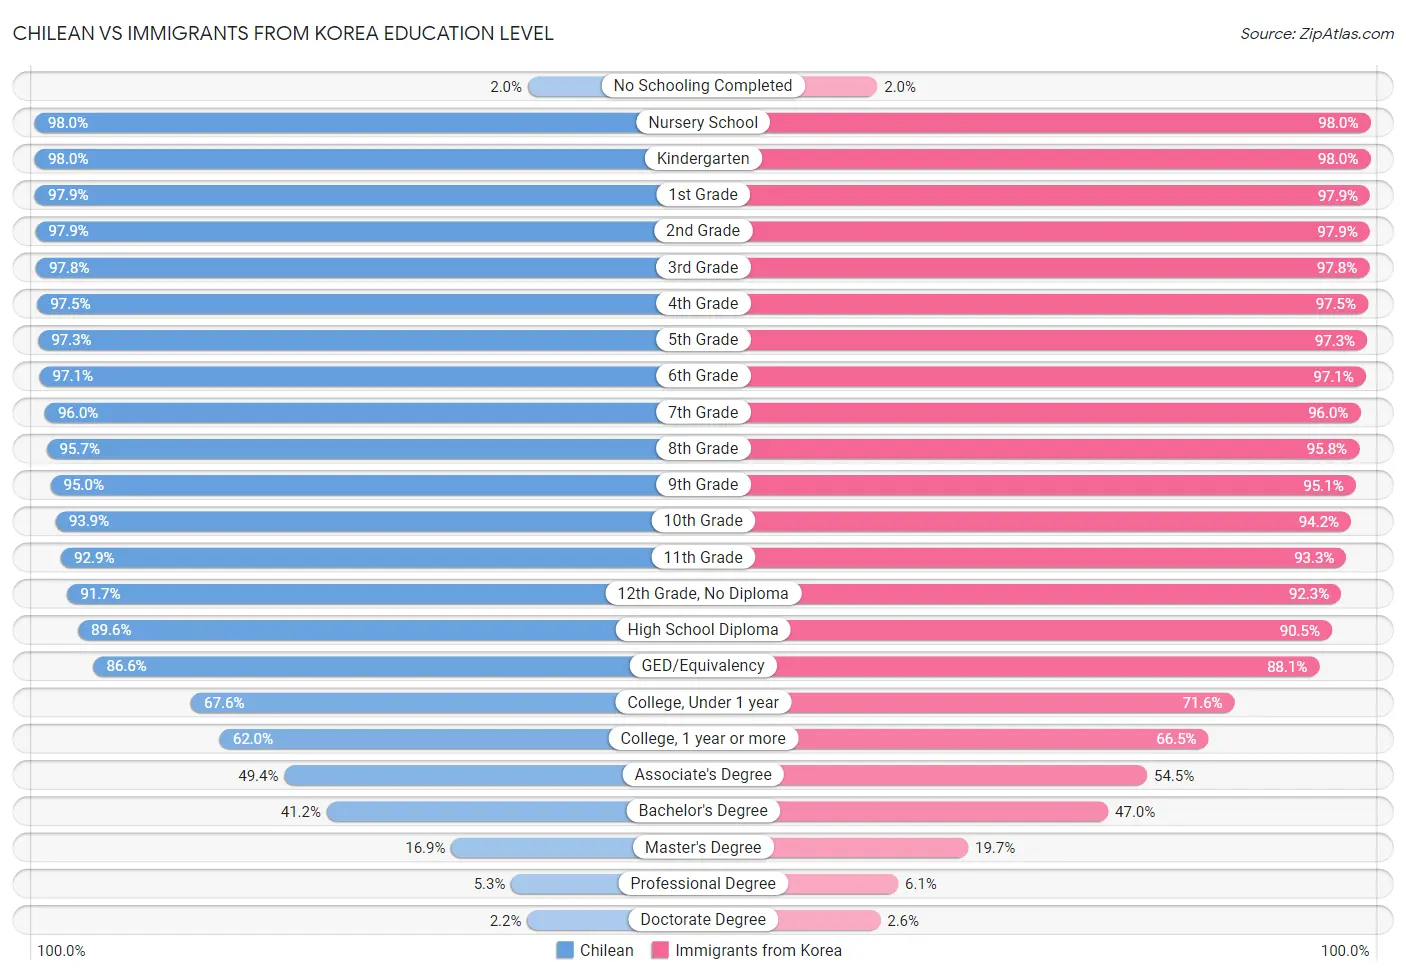 Chilean vs Immigrants from Korea Education Level